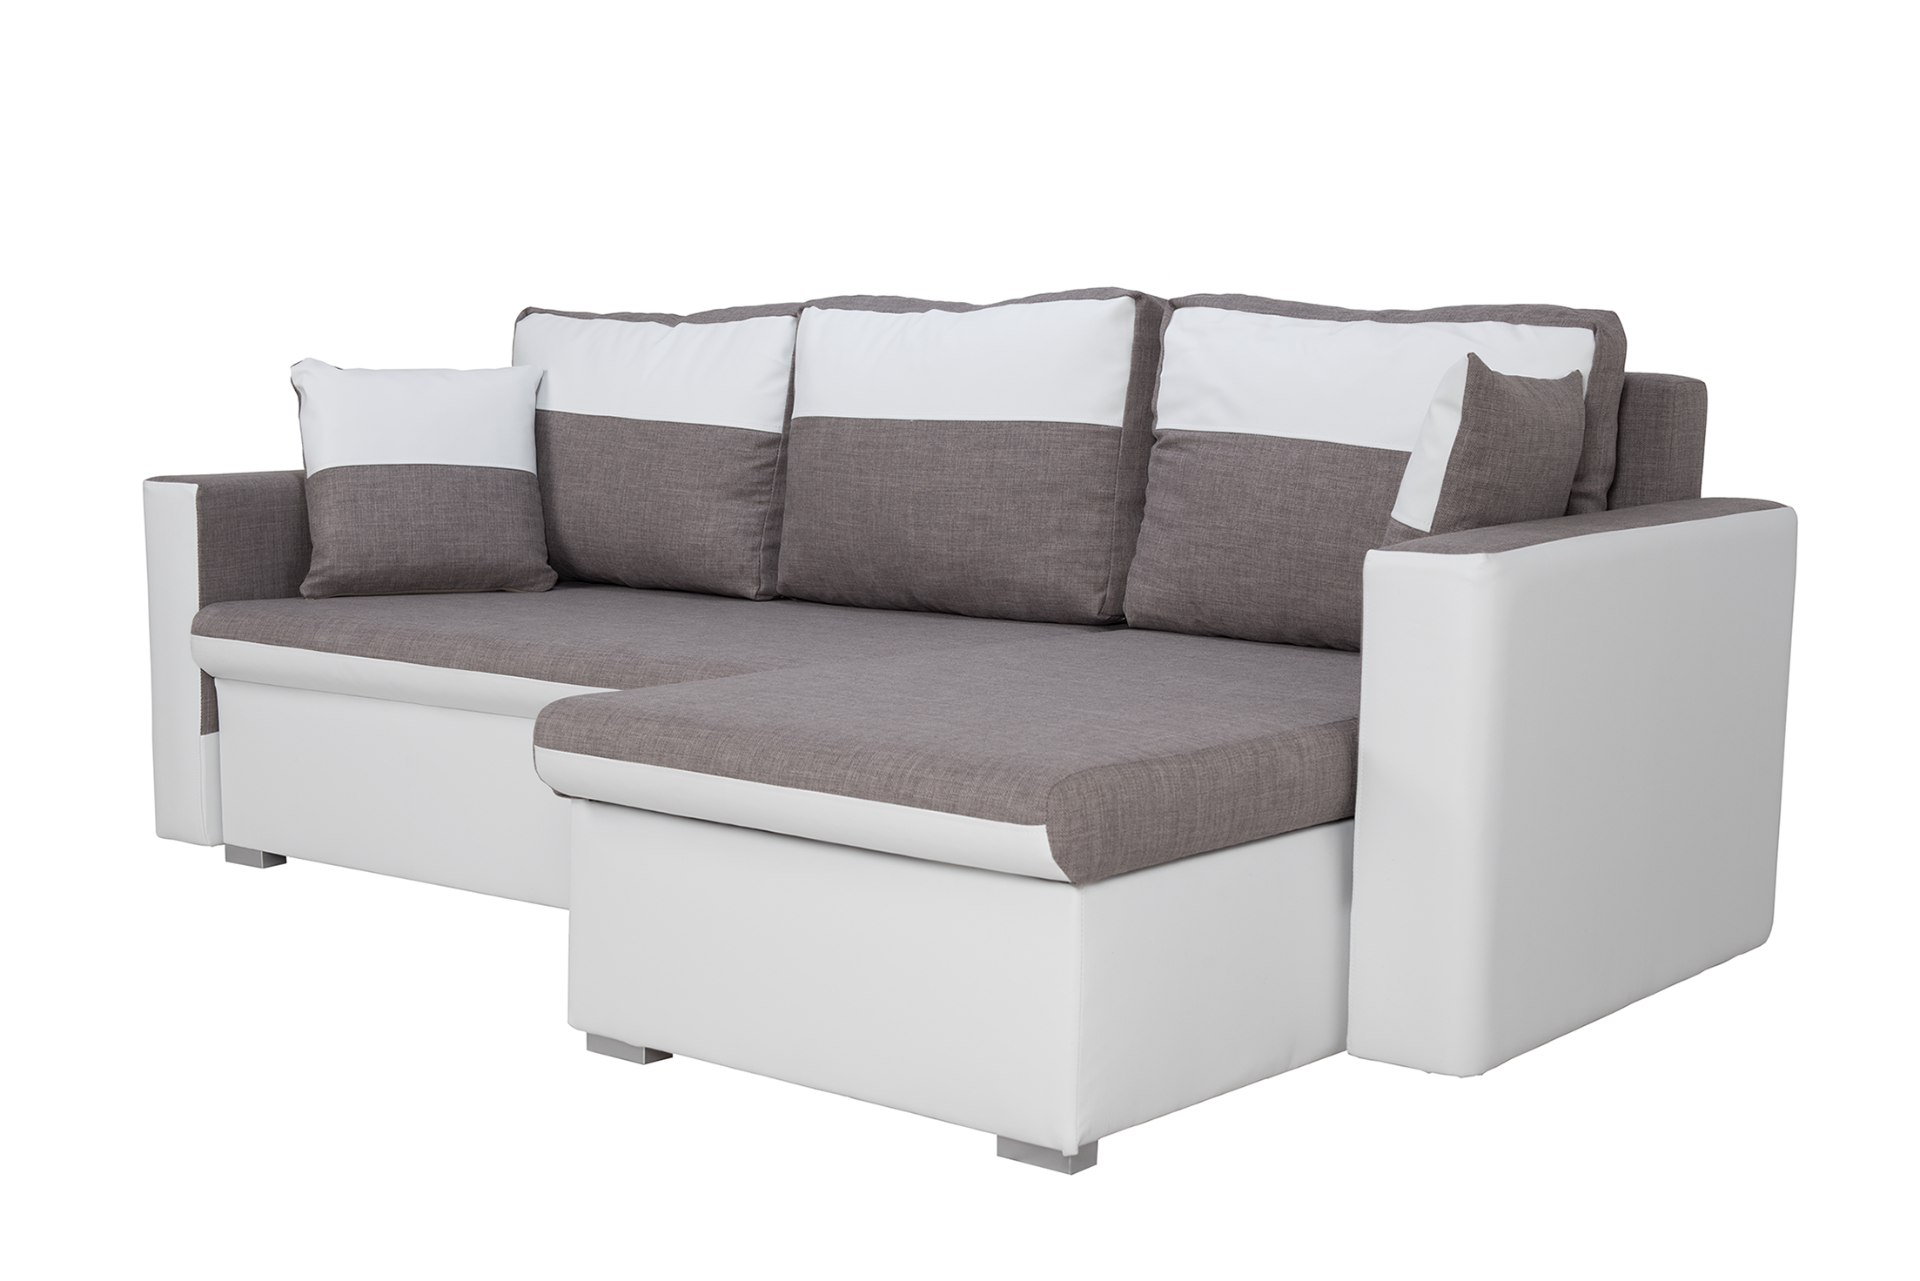 Brand New FlVio Right Hand Facing White/Grey Corner Fold Out Sofa Bed With Storage - Image 3 of 3